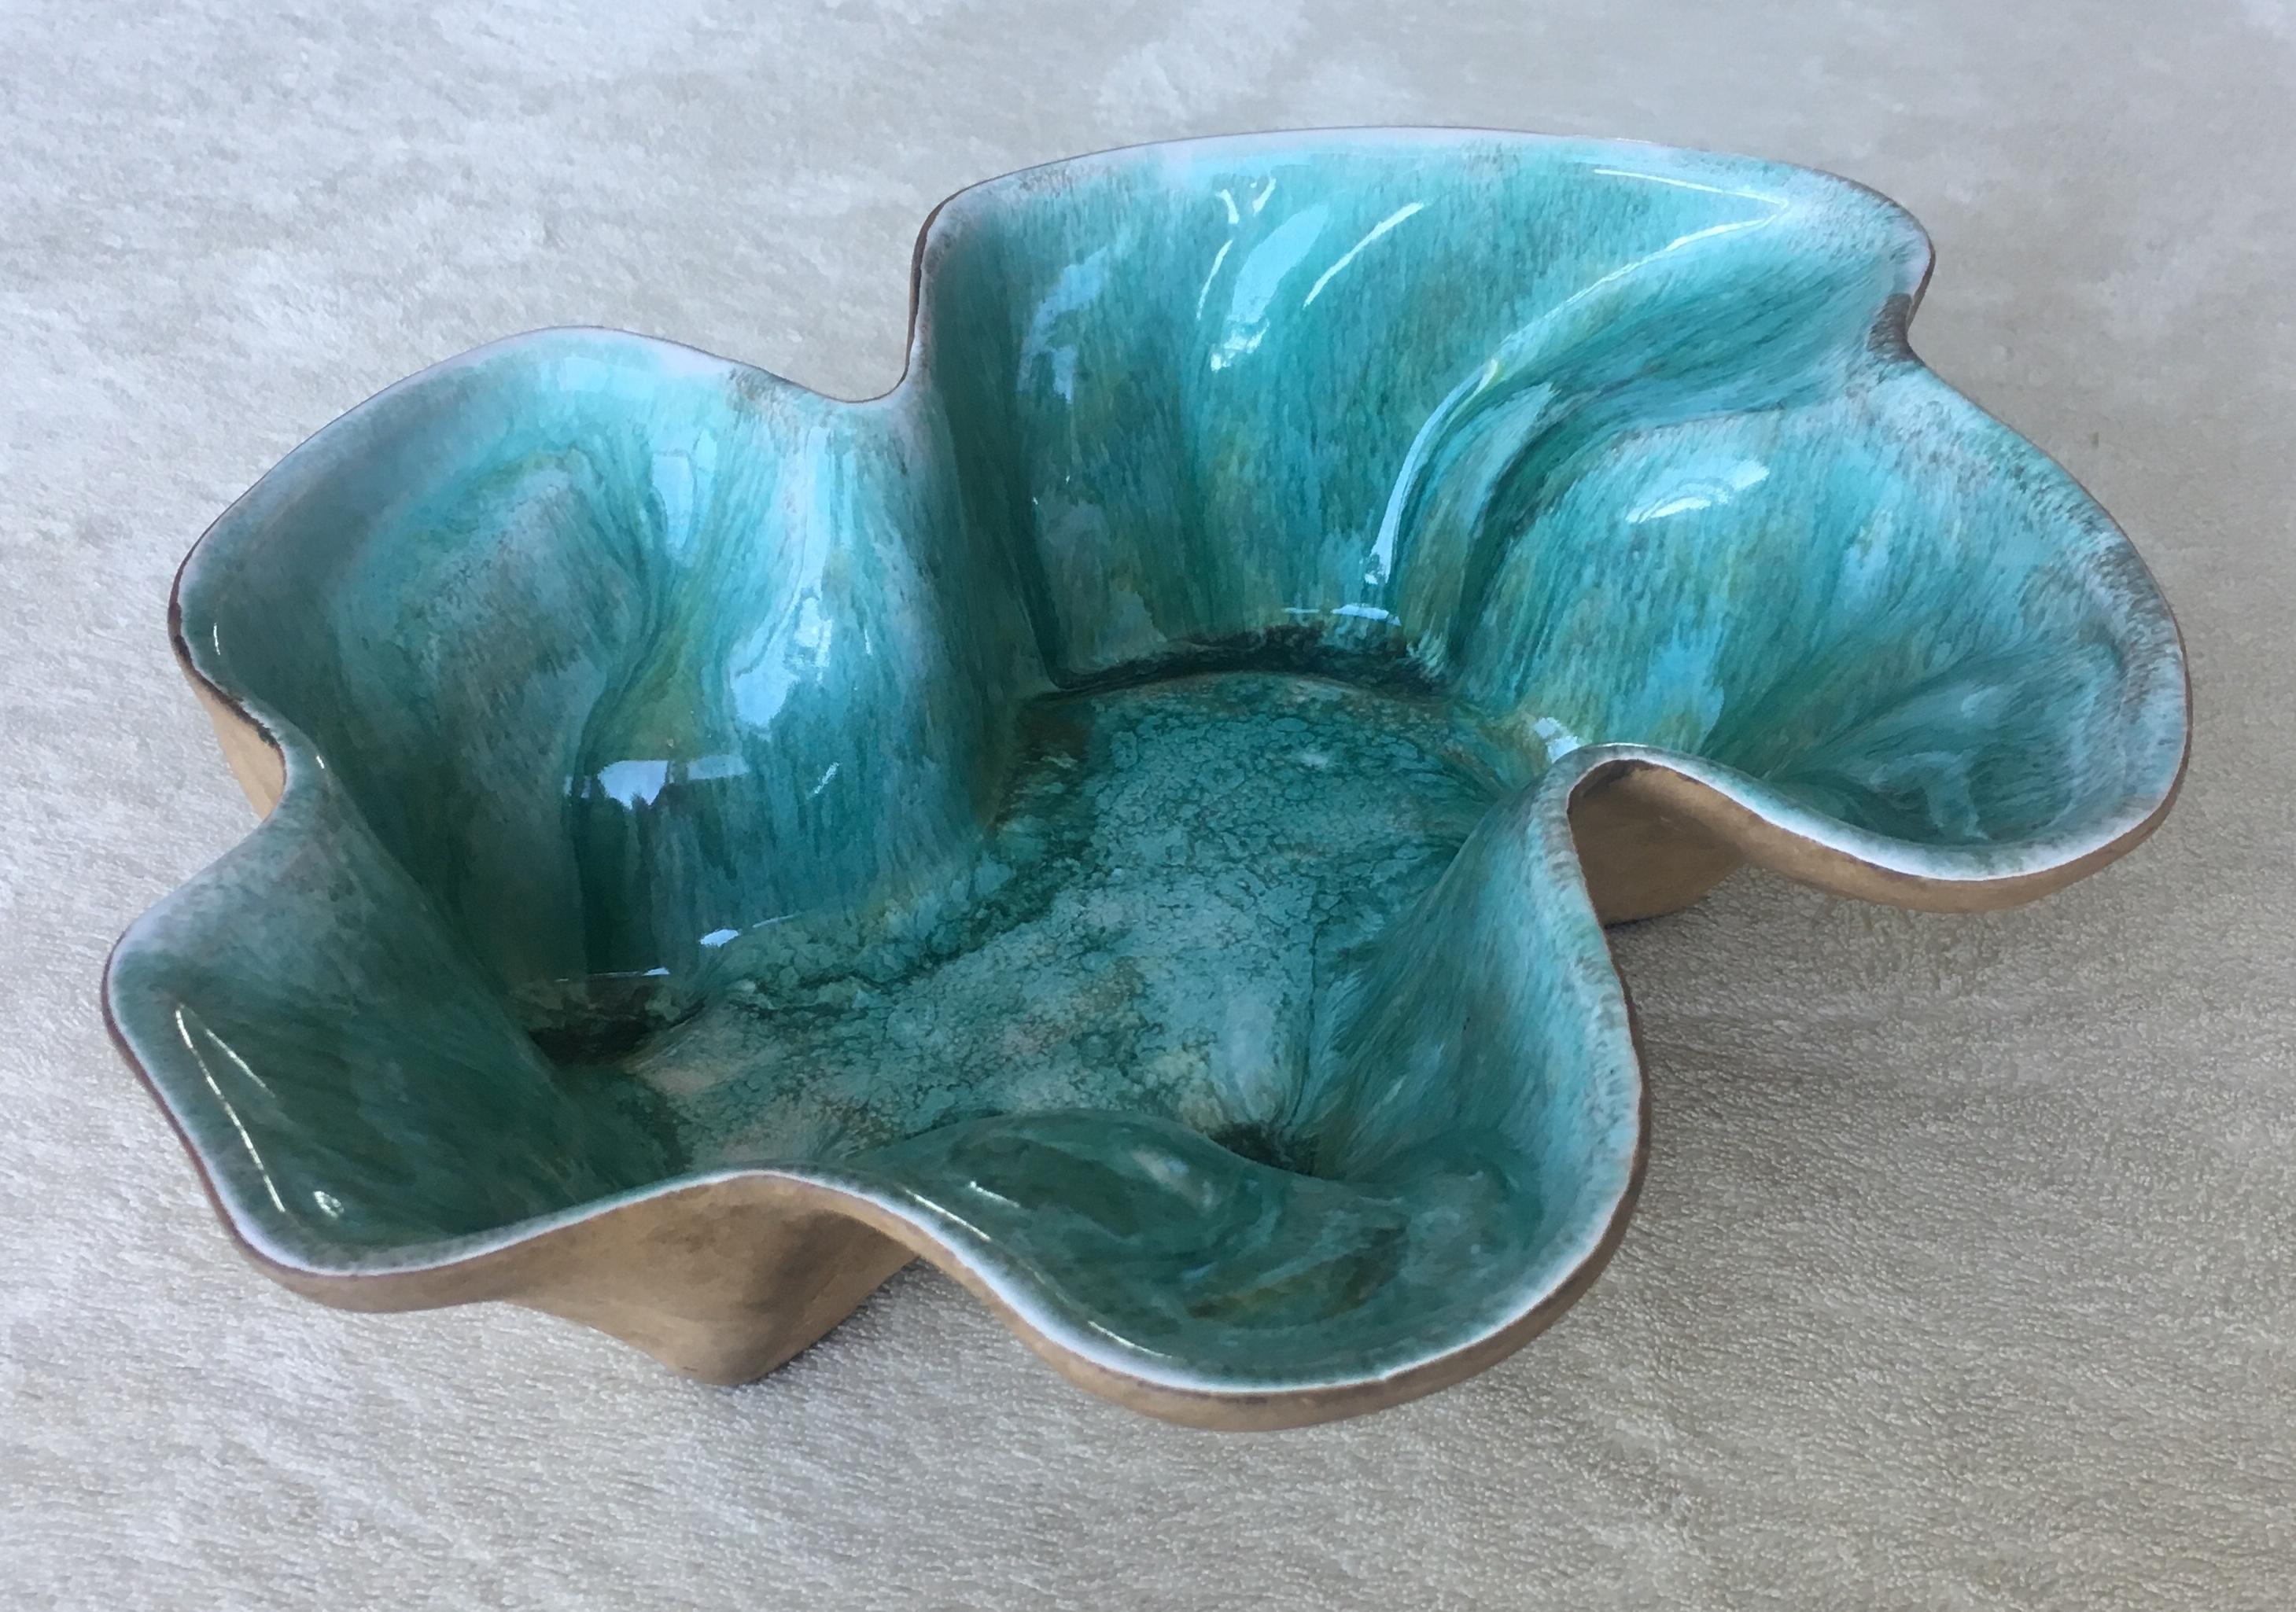 Stunning naturalistic pottery bowl by an American ceramics artist, Flora Eckert Hammat of Tulsa, Oklahoma. Vivid colors, original organic form. 

Signed Hammat original and numbered 326. This artist produced this remarkable bi-form pottery between